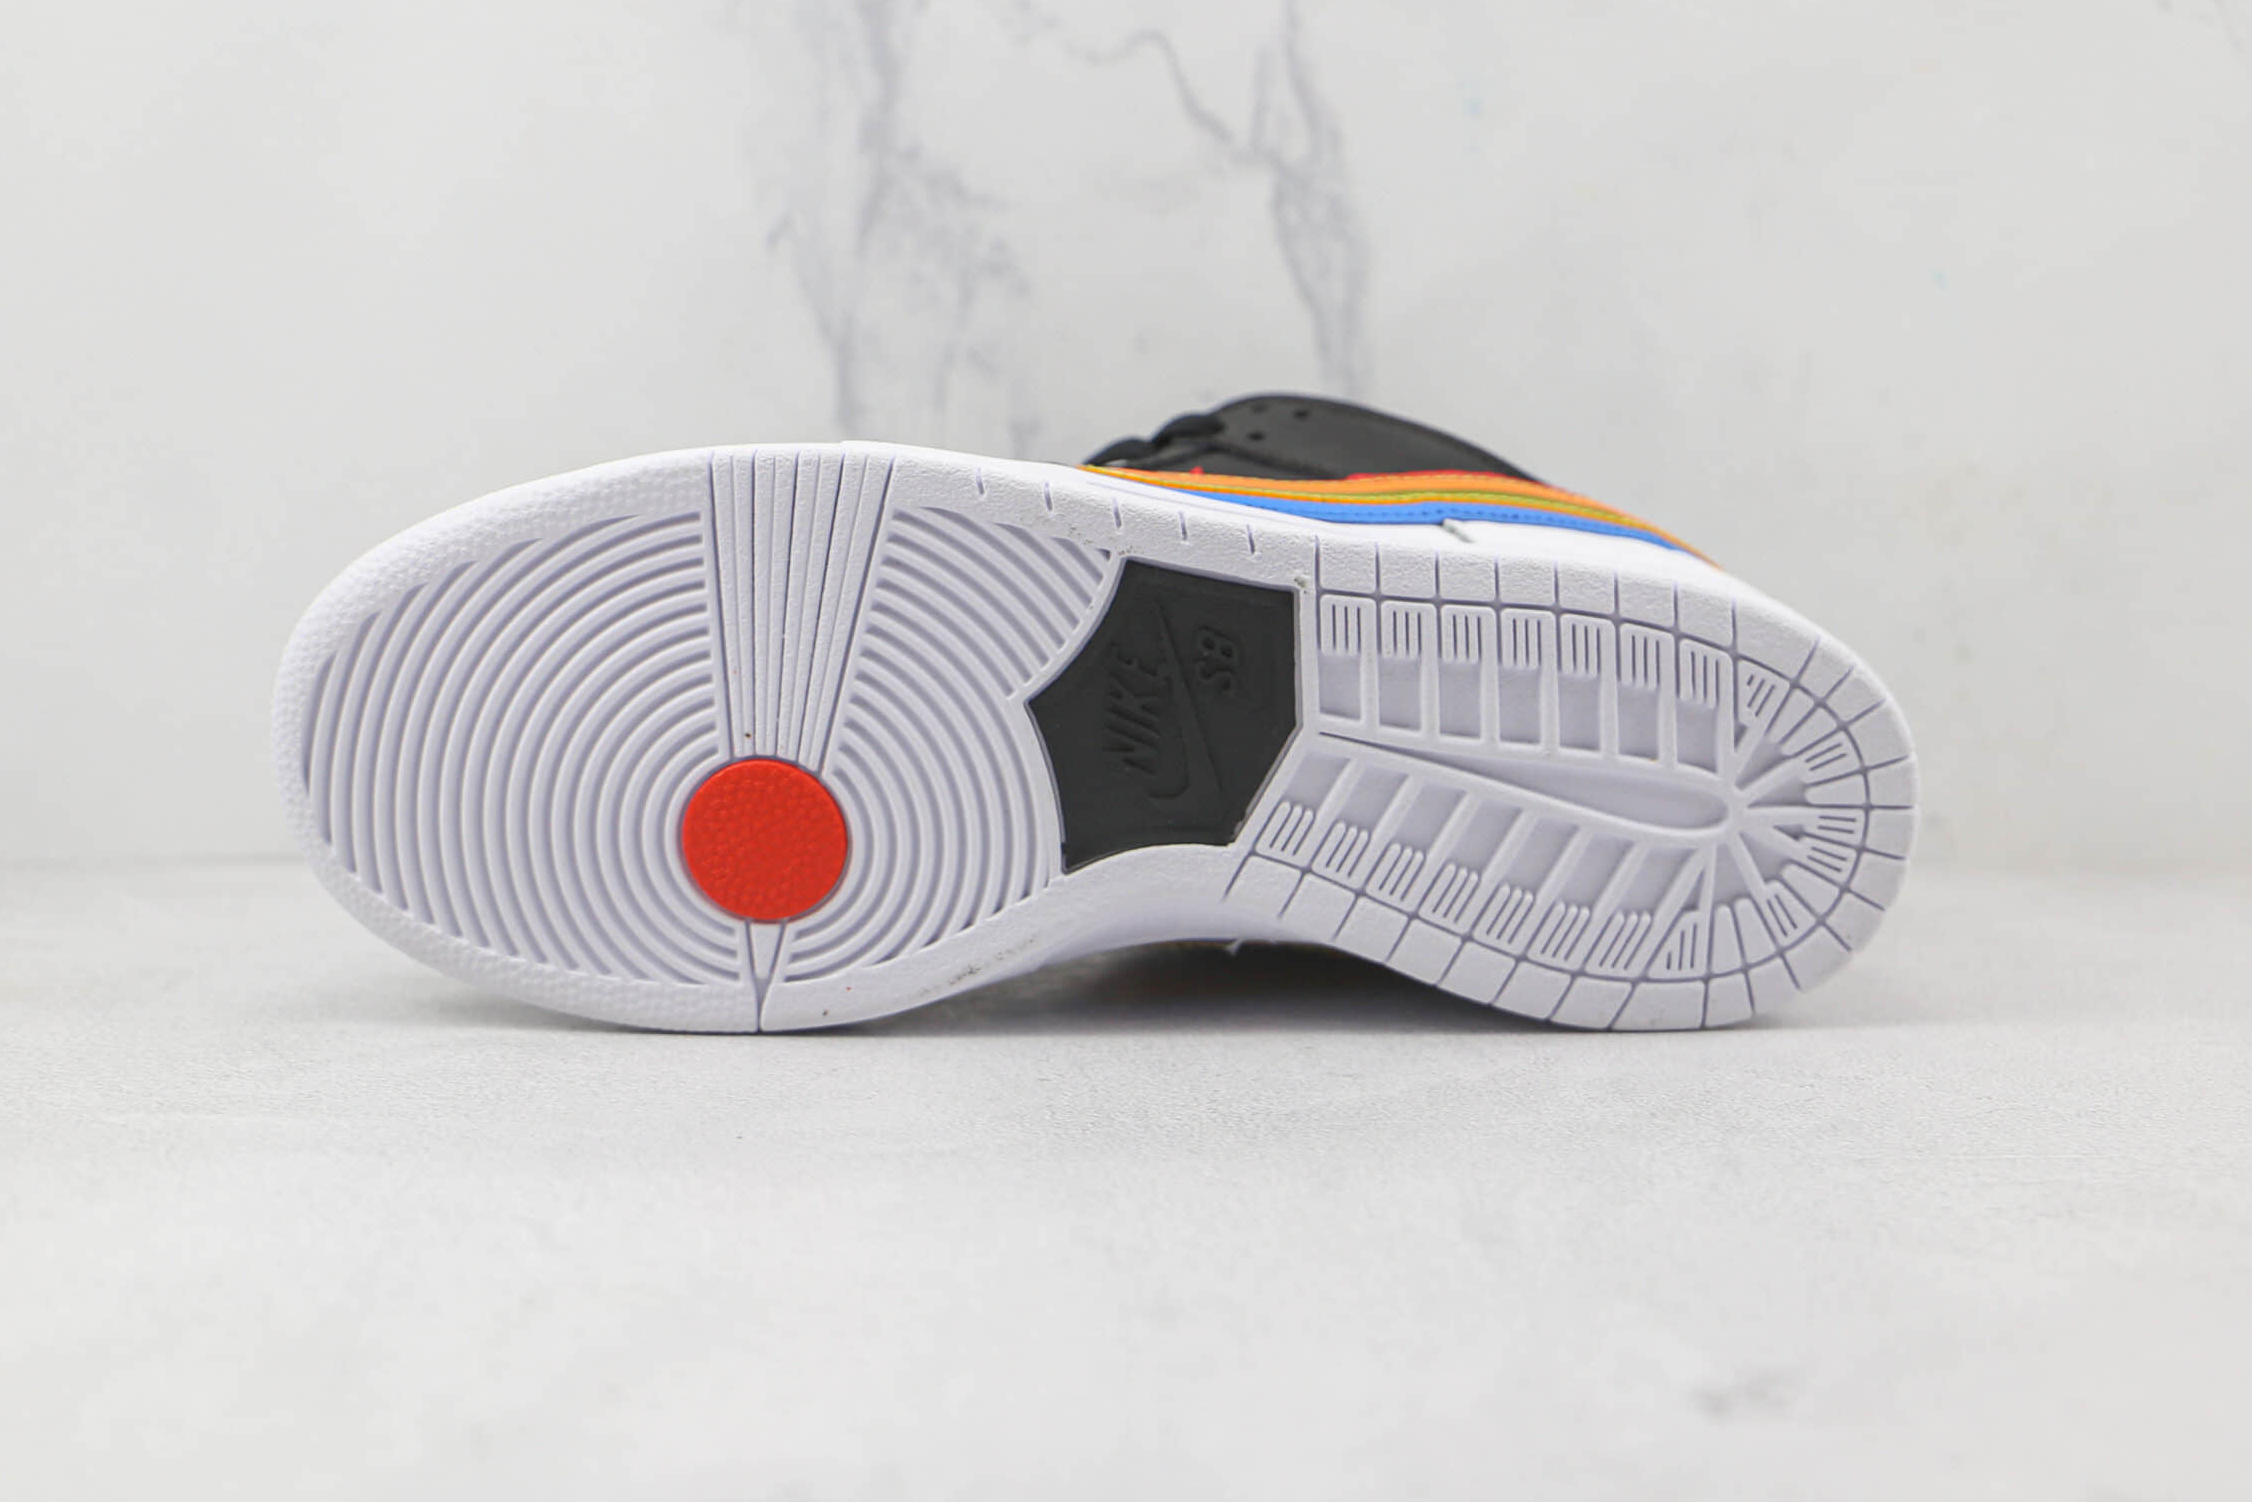 Polaroid x Nike SB Skateboard Dunk Low 'Black White Red' DH7722-001 - Stylish and Bold Skate Shoes